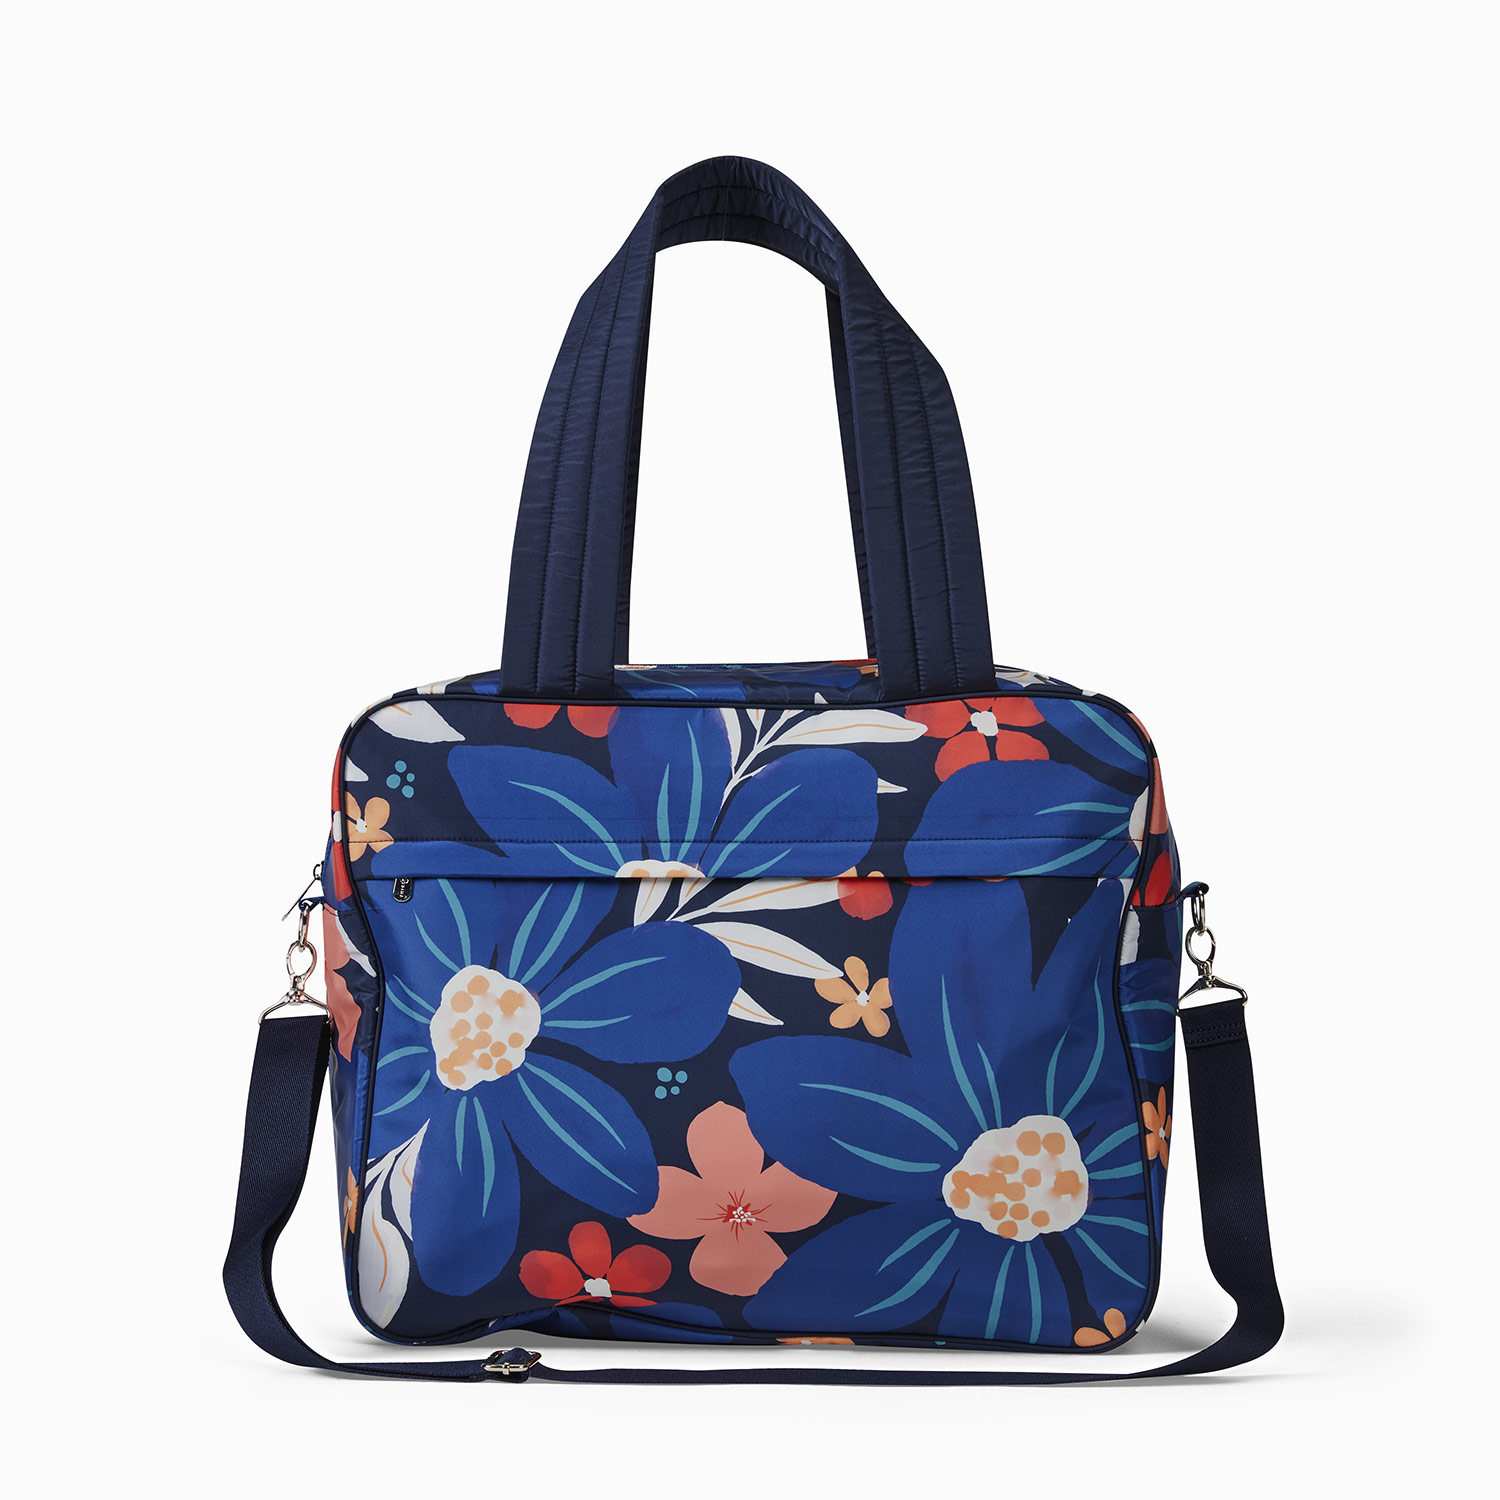 Vera Bradley Pink Green Floral Shoulder Bag Purse 13x9 inches | eBay